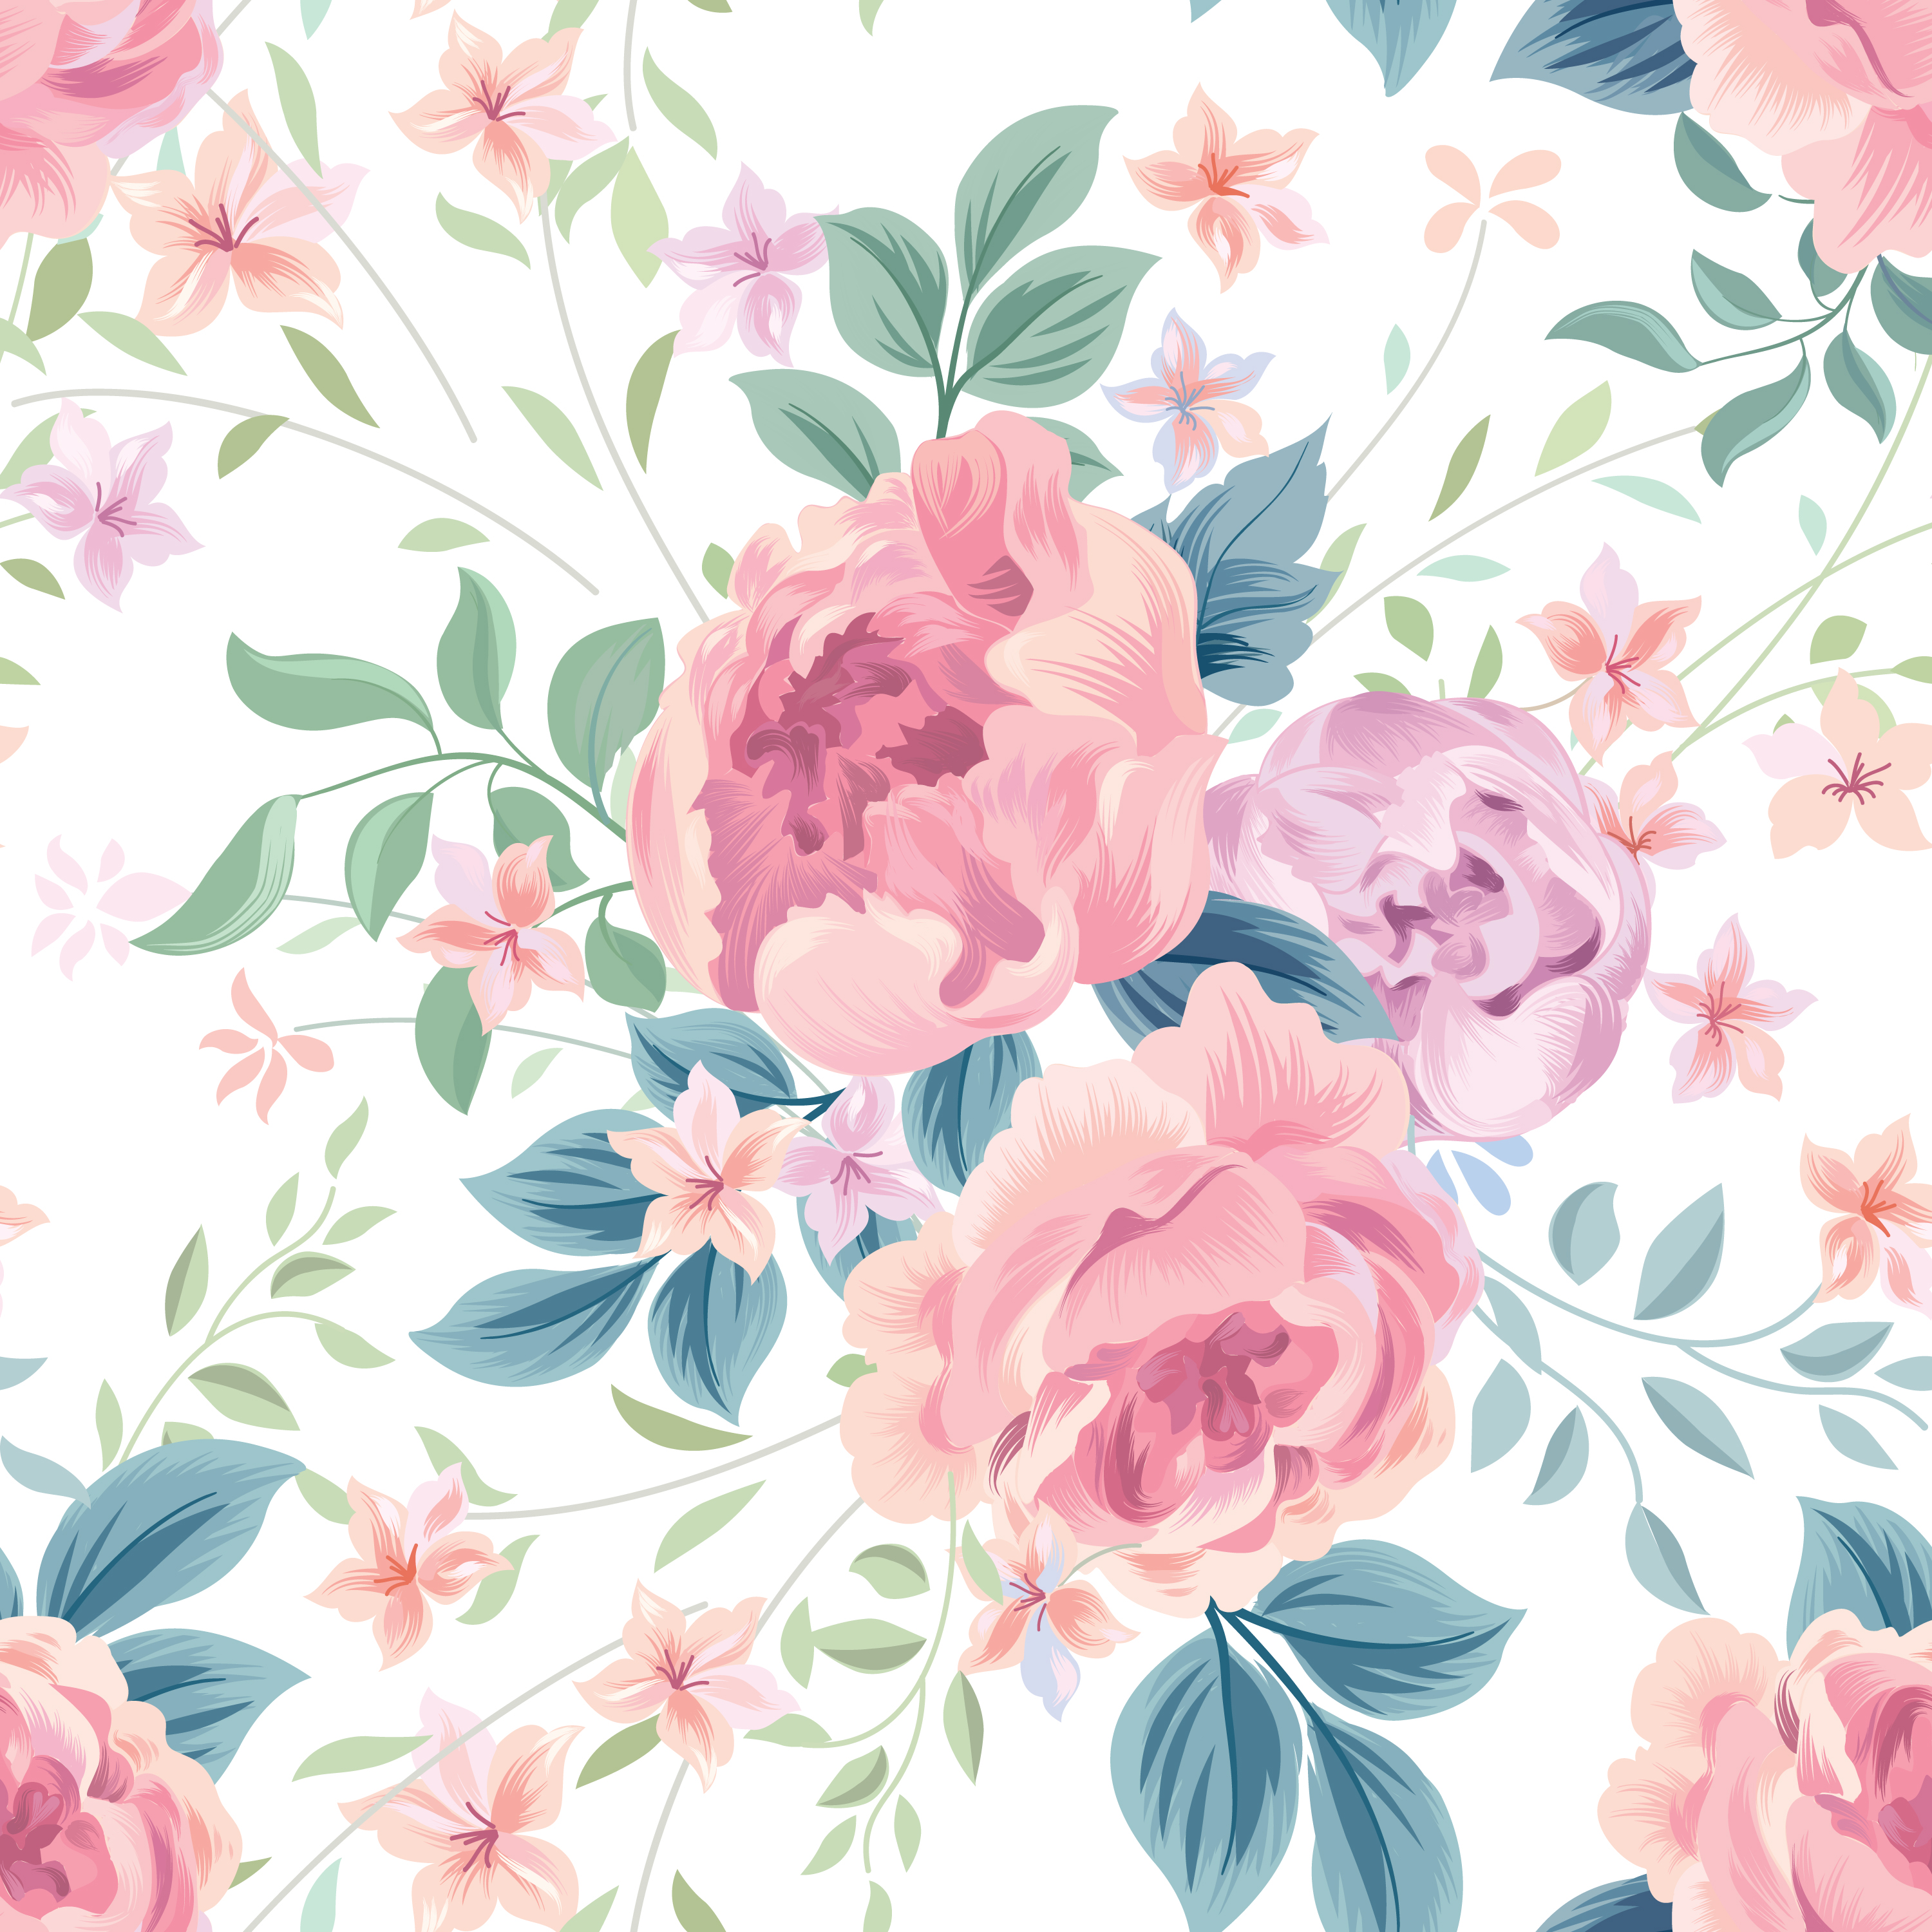 Floral Wallpaper Svg Free - 633+ SVG PNG EPS DXF in Zip File - Free SVG